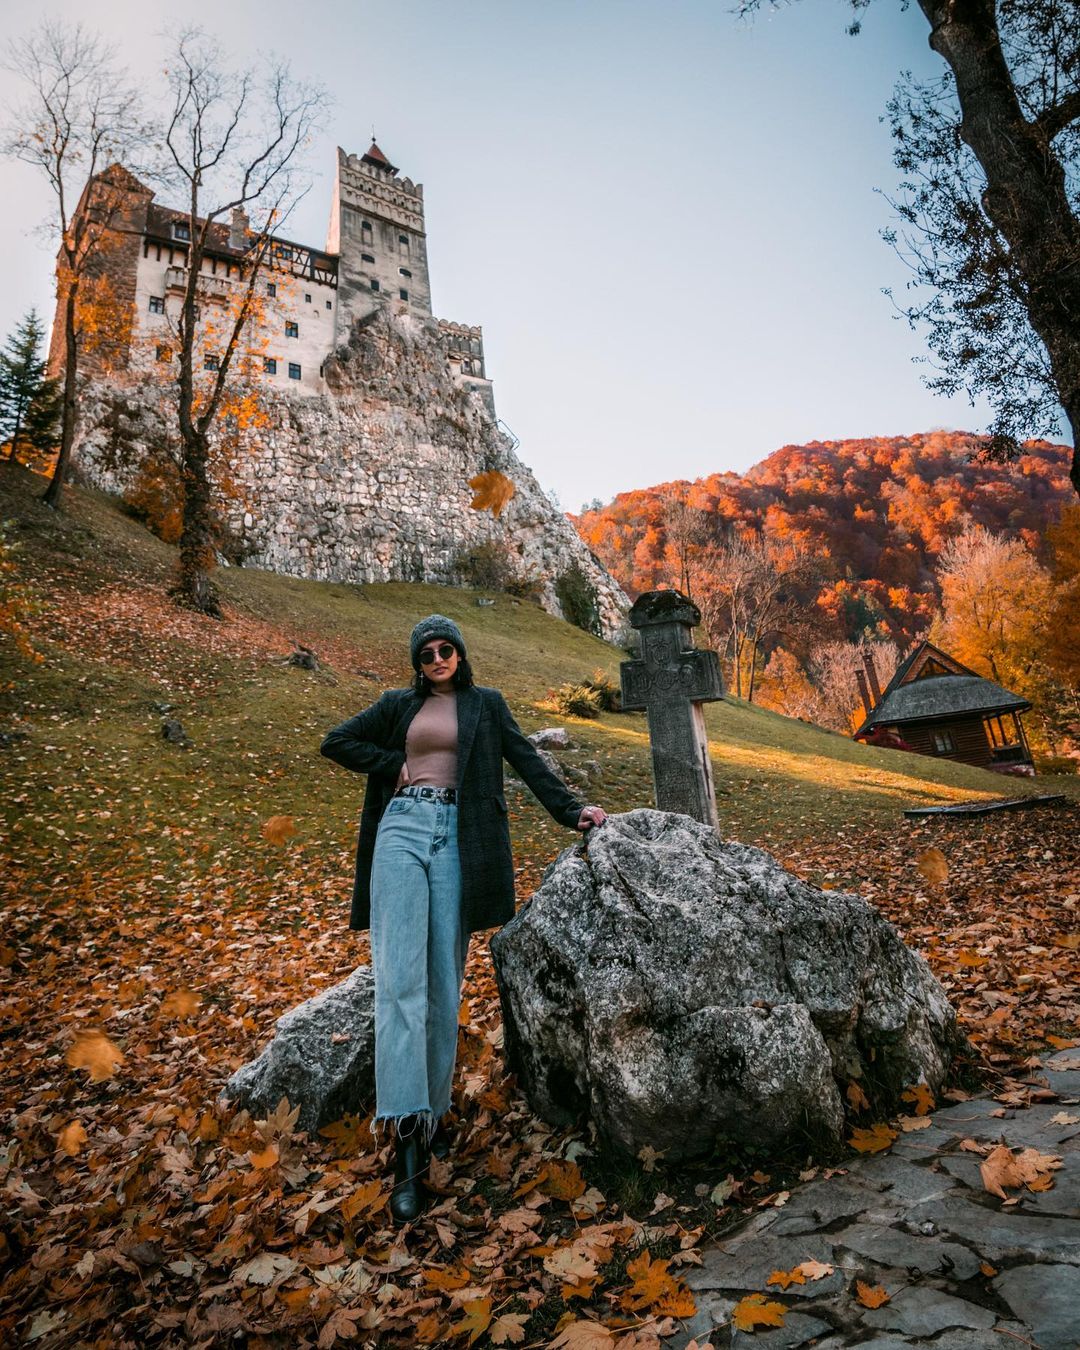 Bran Castle - Romania in autumn